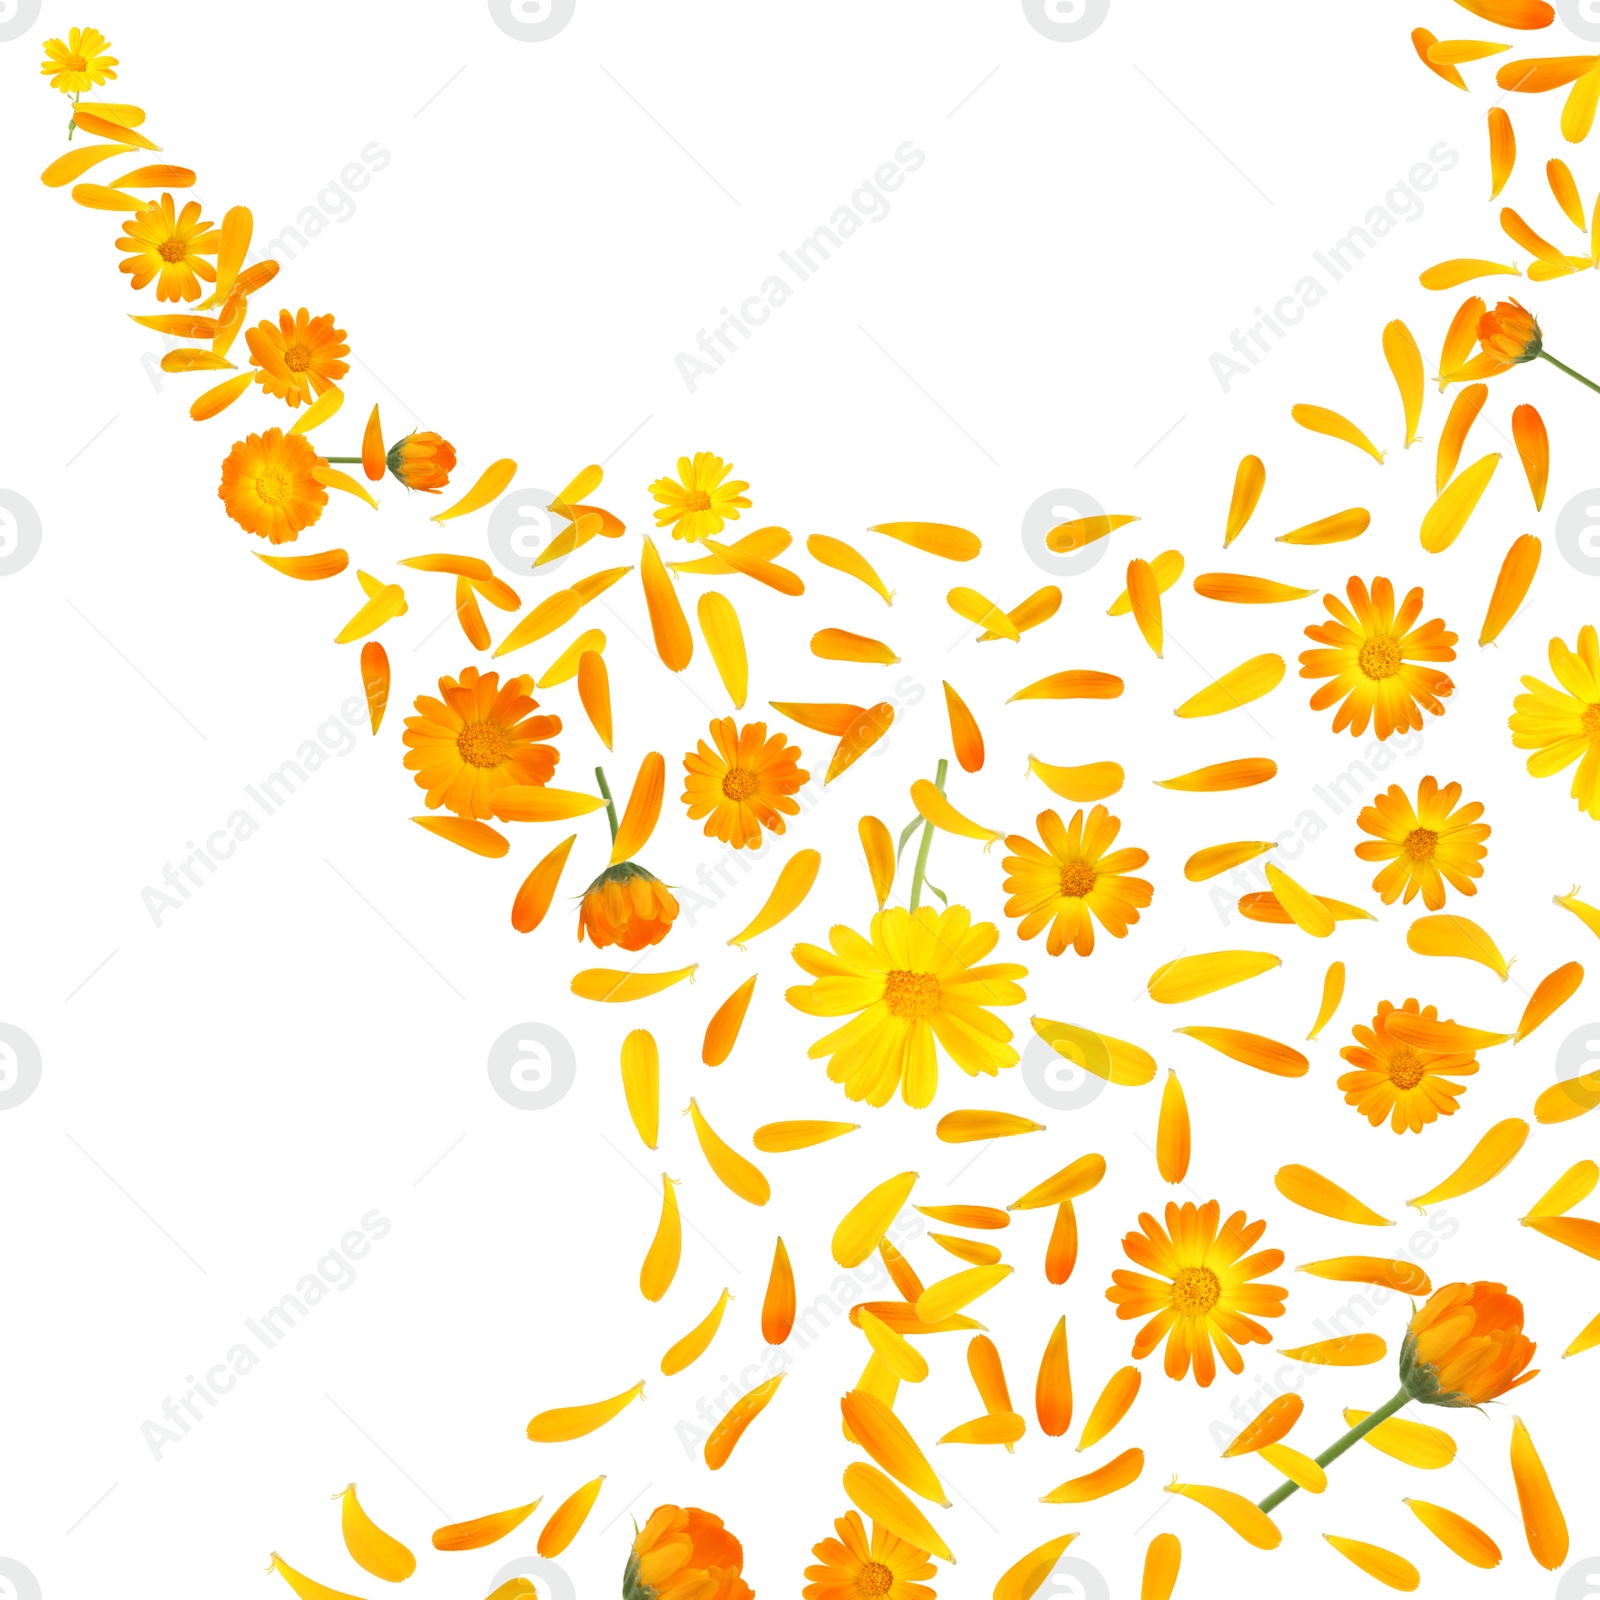 Image of Beautiful calendula flowers and petals falling on white background